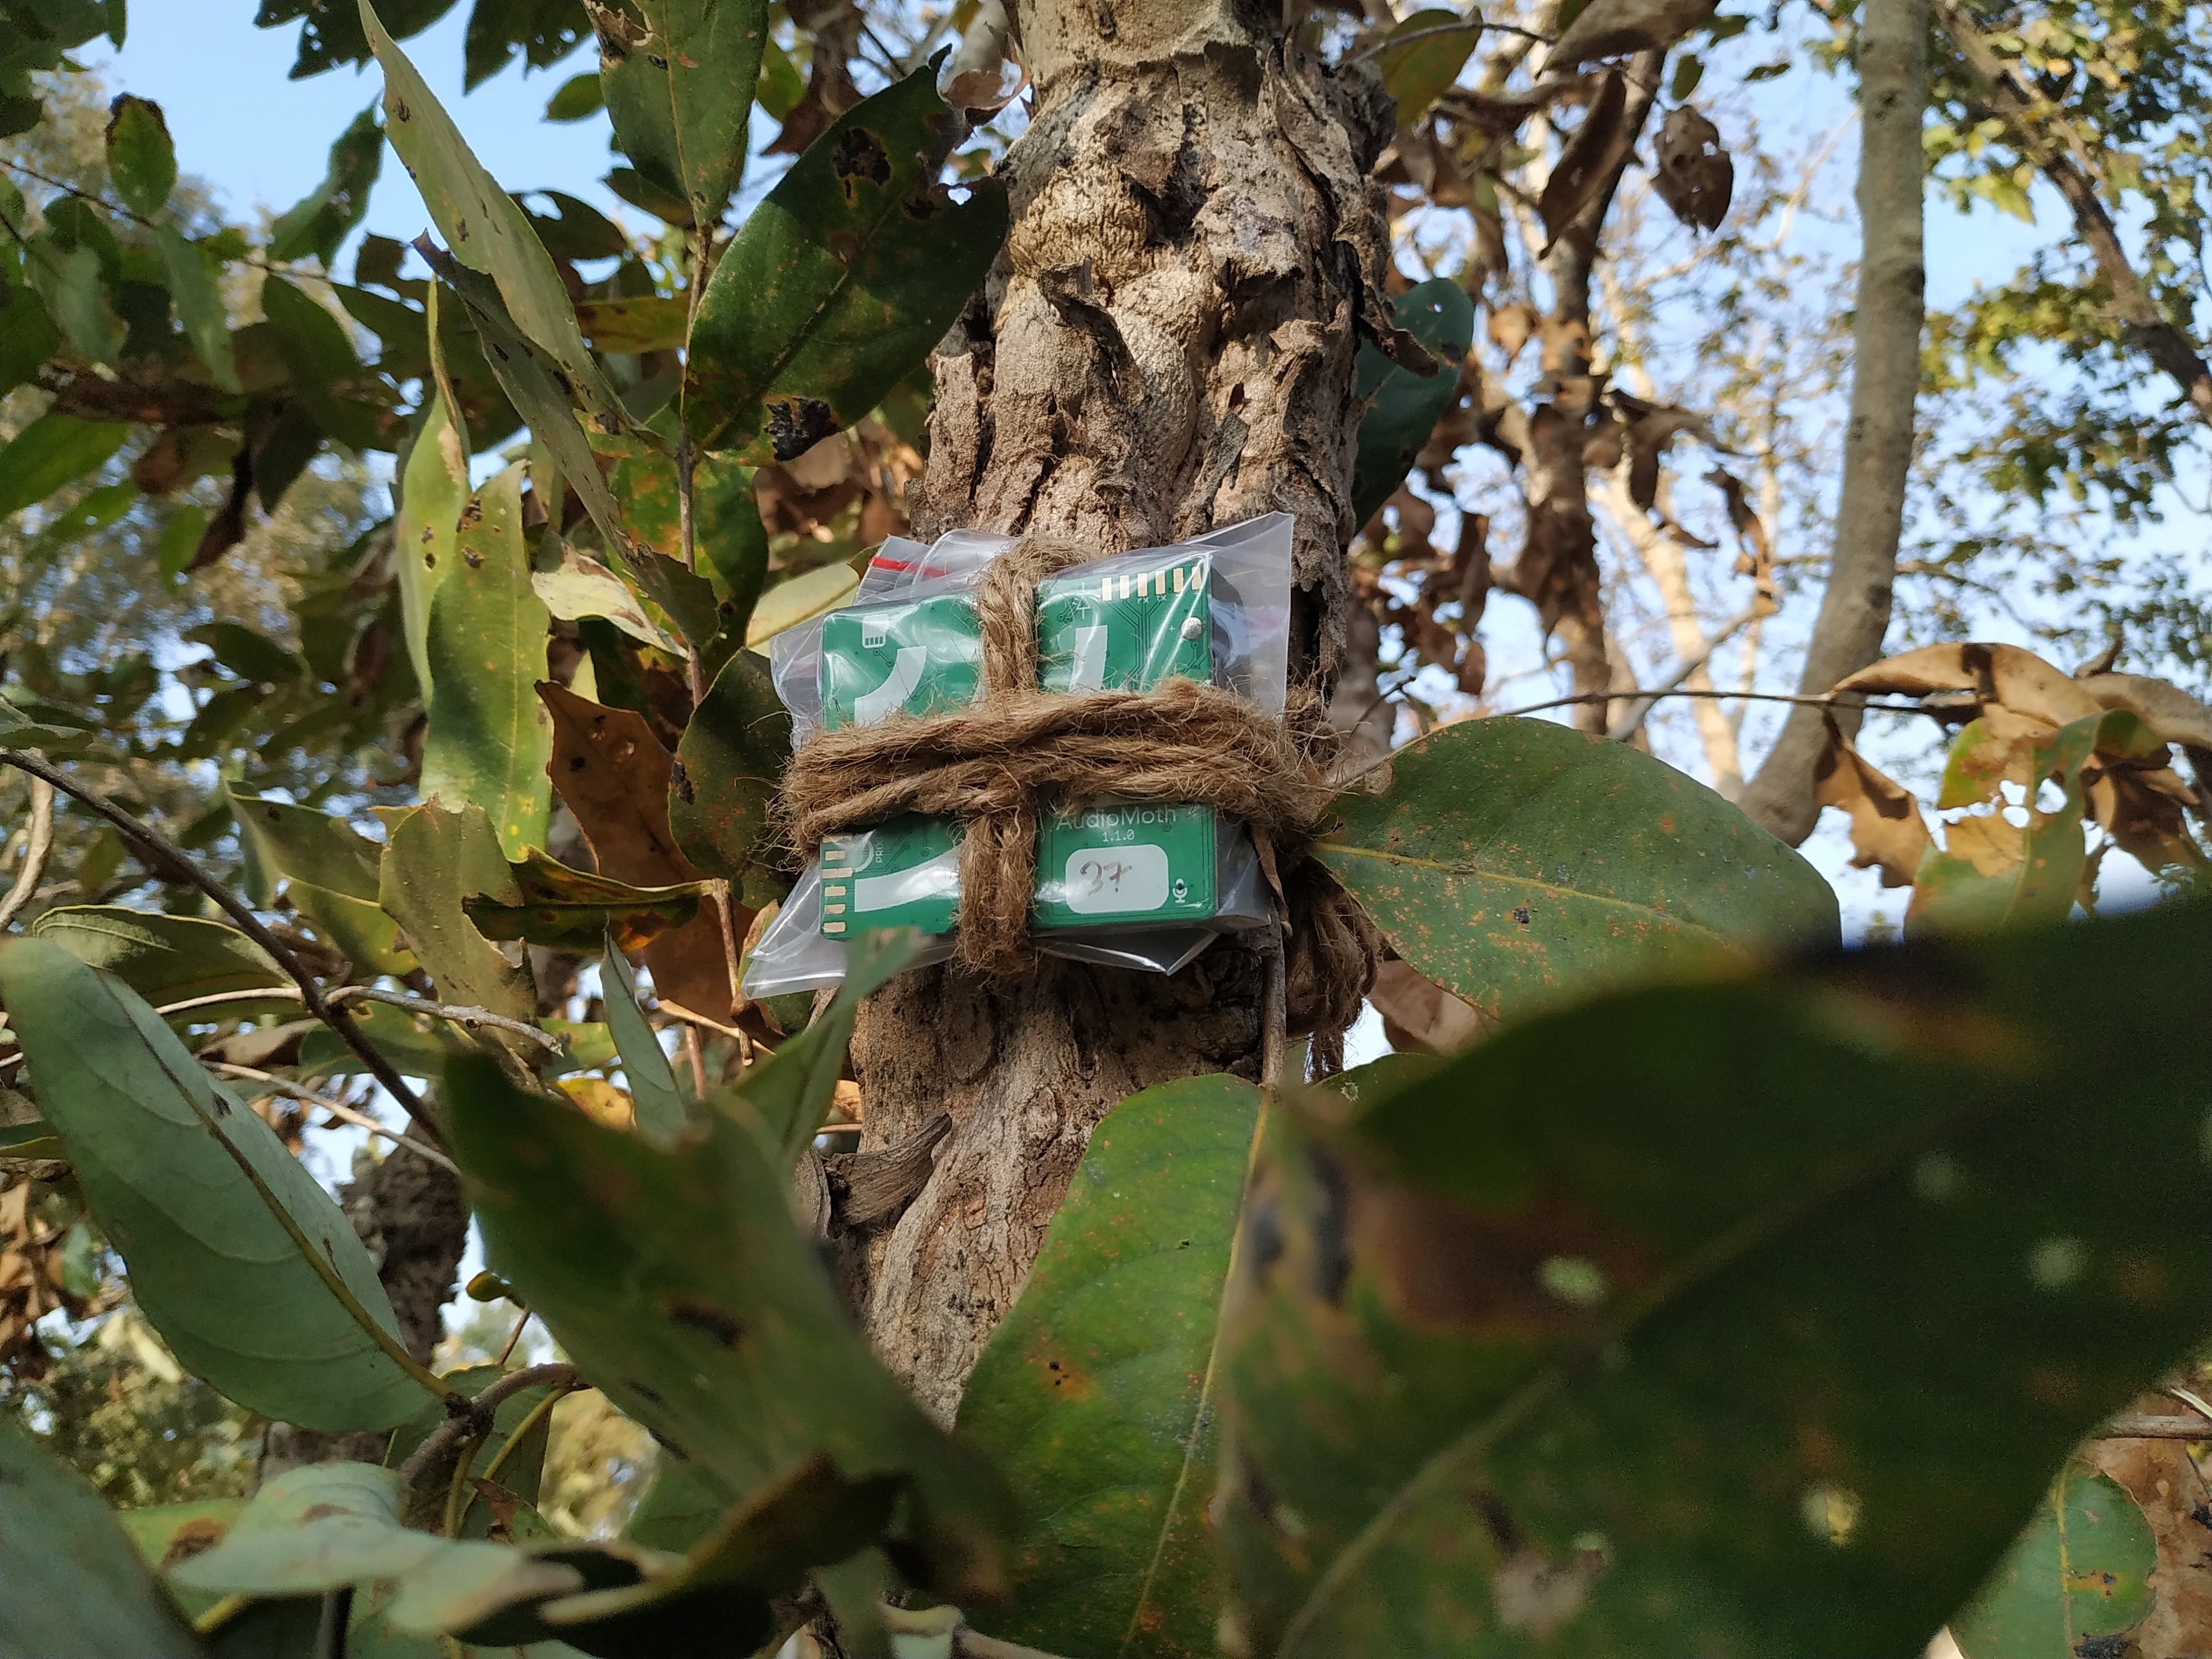 Recorder tied to the tree. Photo Credit: Pooja Choksi